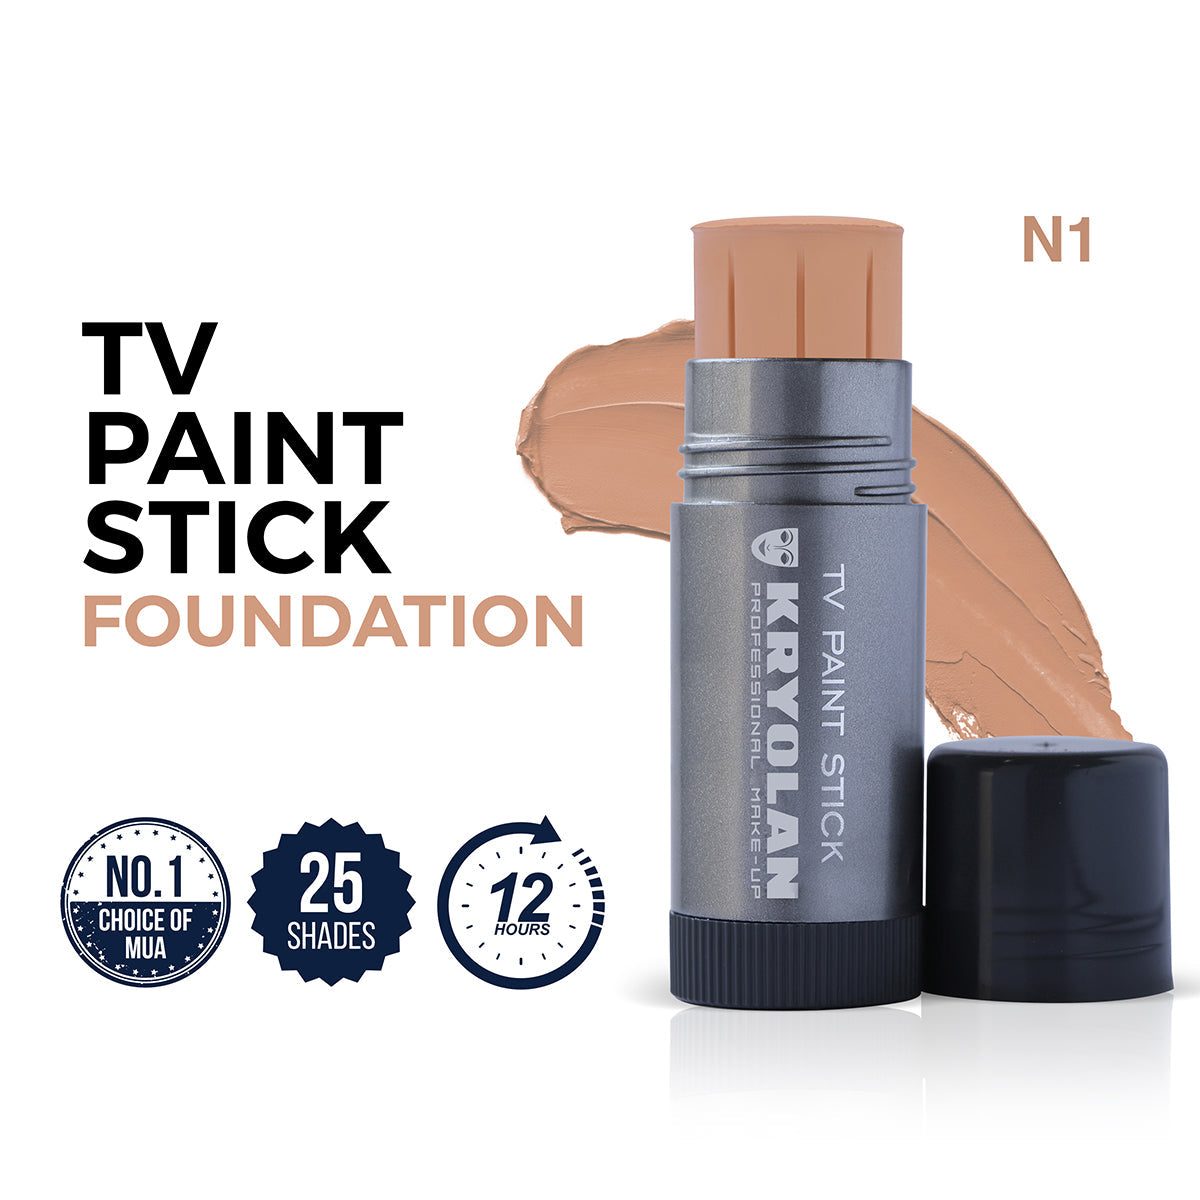 ORIGINAL Tv Paint Stick  Kryolan ALL SHADE AVAILABLE - Pak Variety